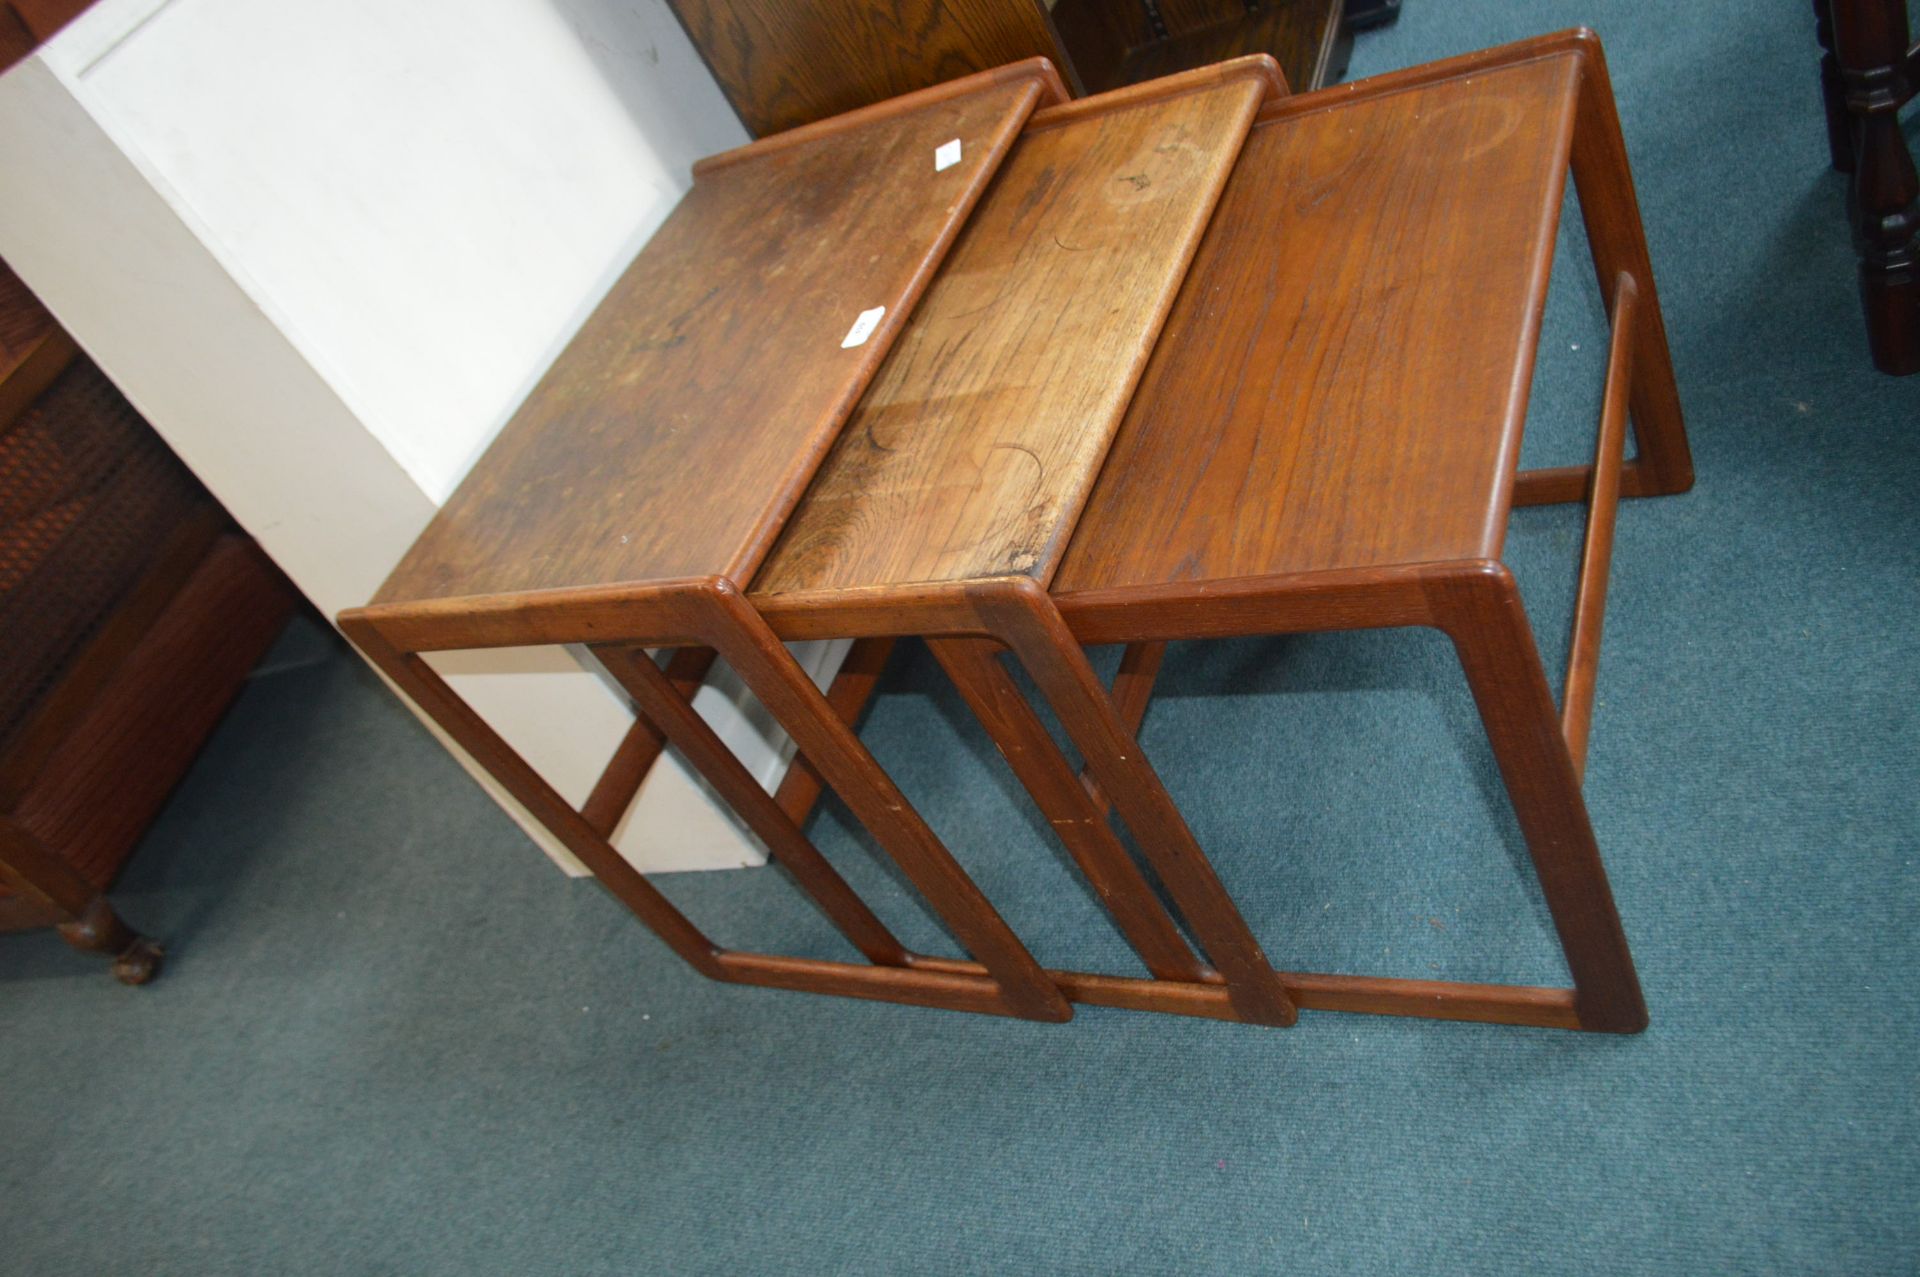 Retro Danish Teak Nest of Tables for Restoration - Image 2 of 3